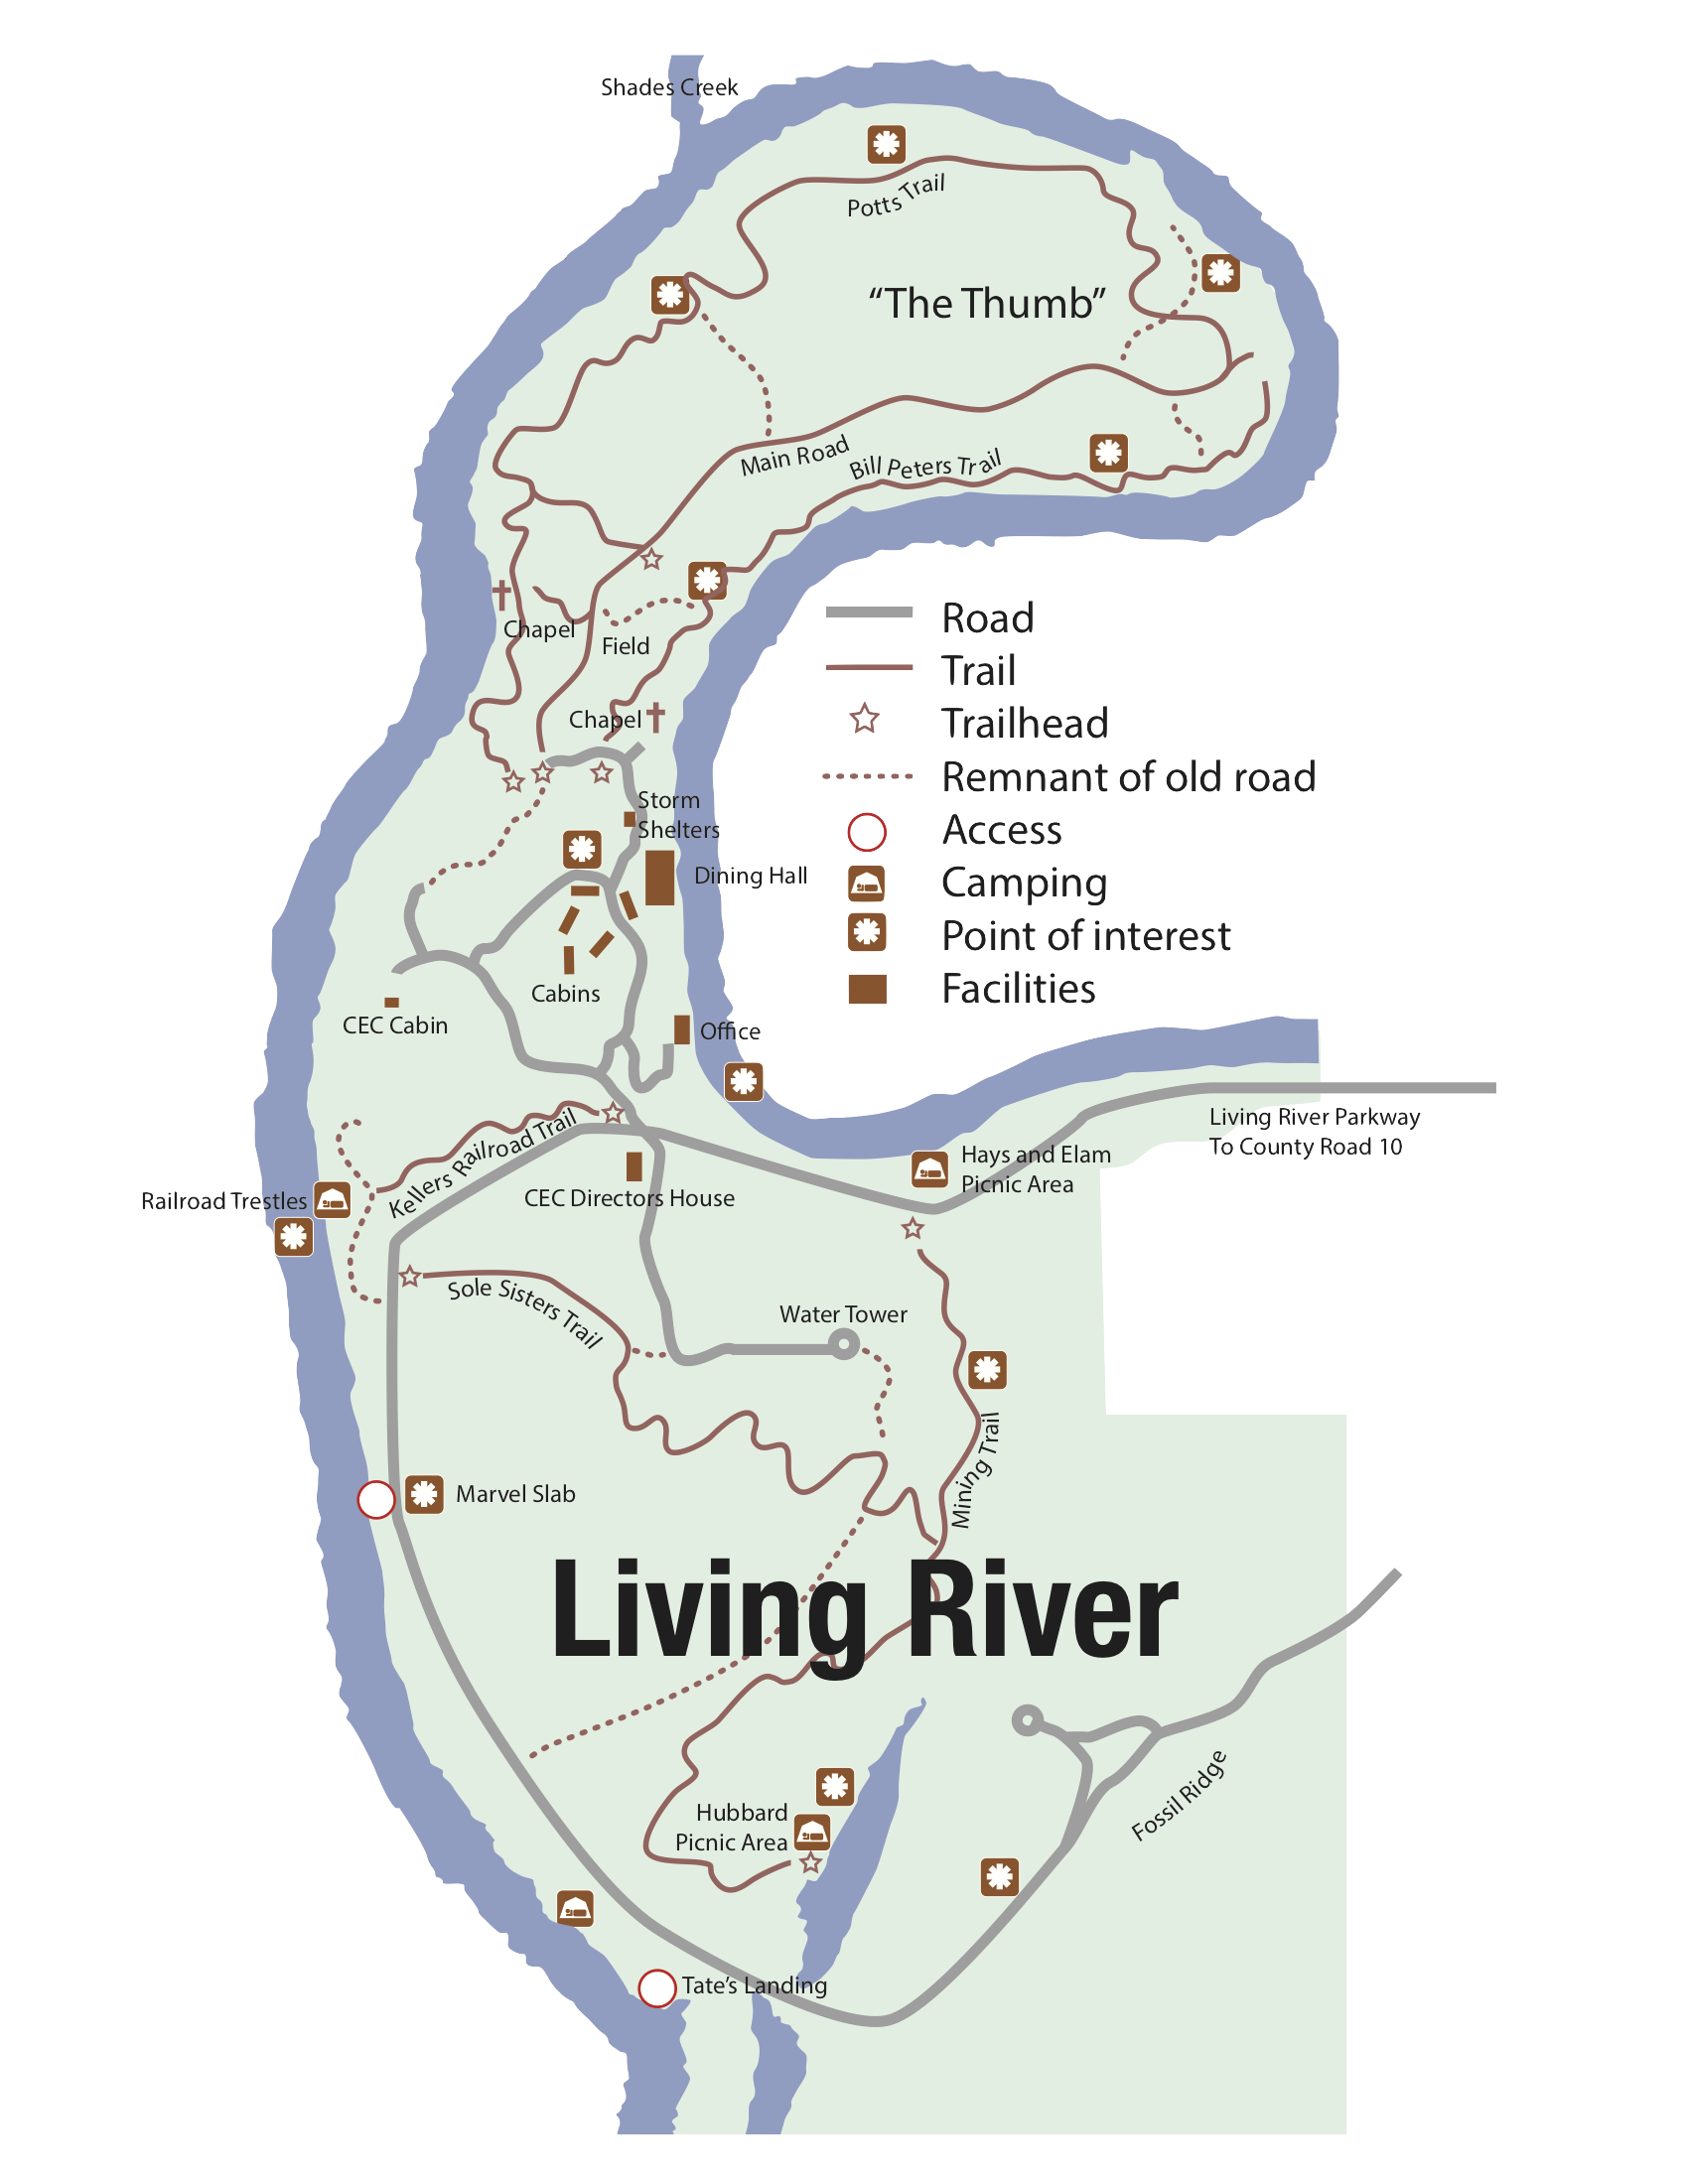 trilhas mapa Living River Cahaba Alabama web